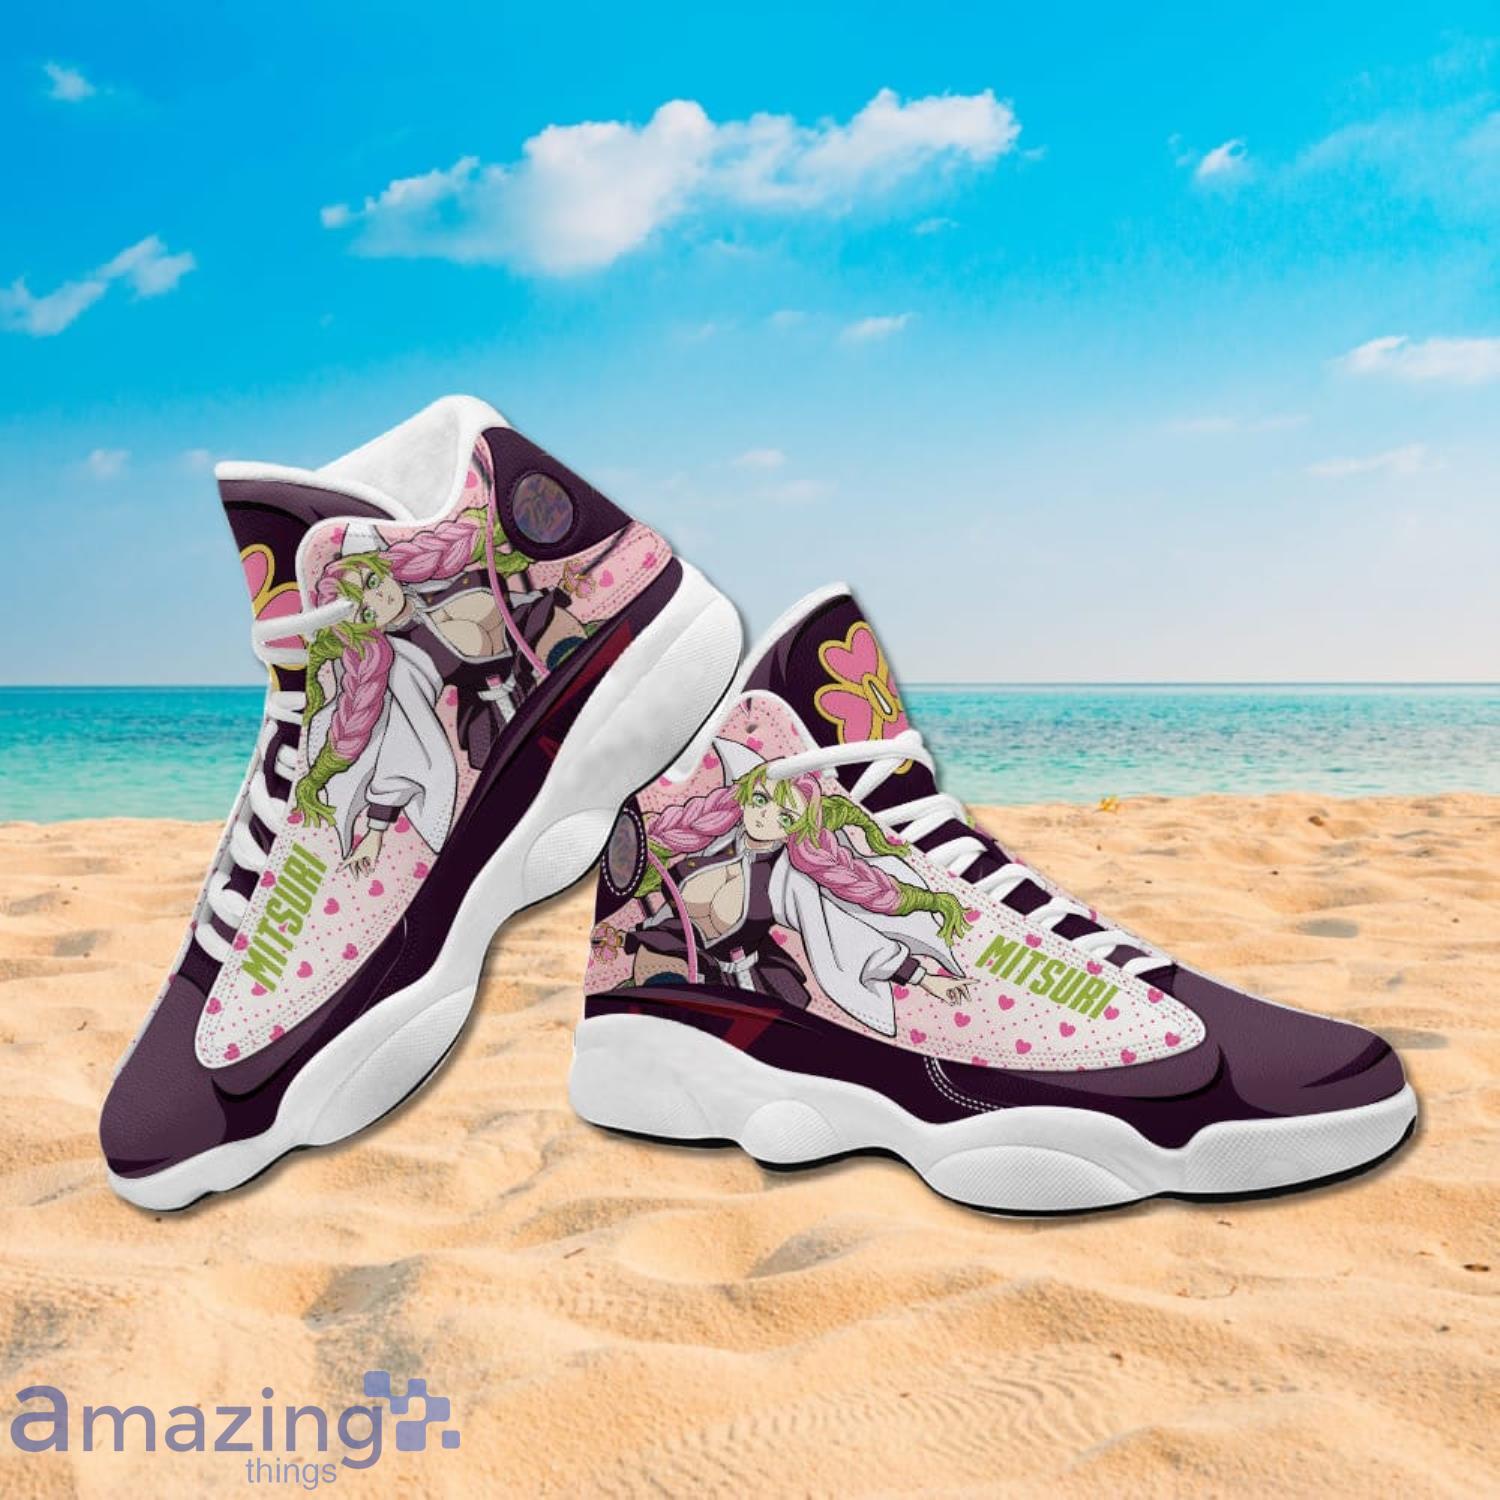 EVA Shoes - Neon Genesis Evangelion Unit-01 Jordan Sneakers Shoes |  Evangelion Merch